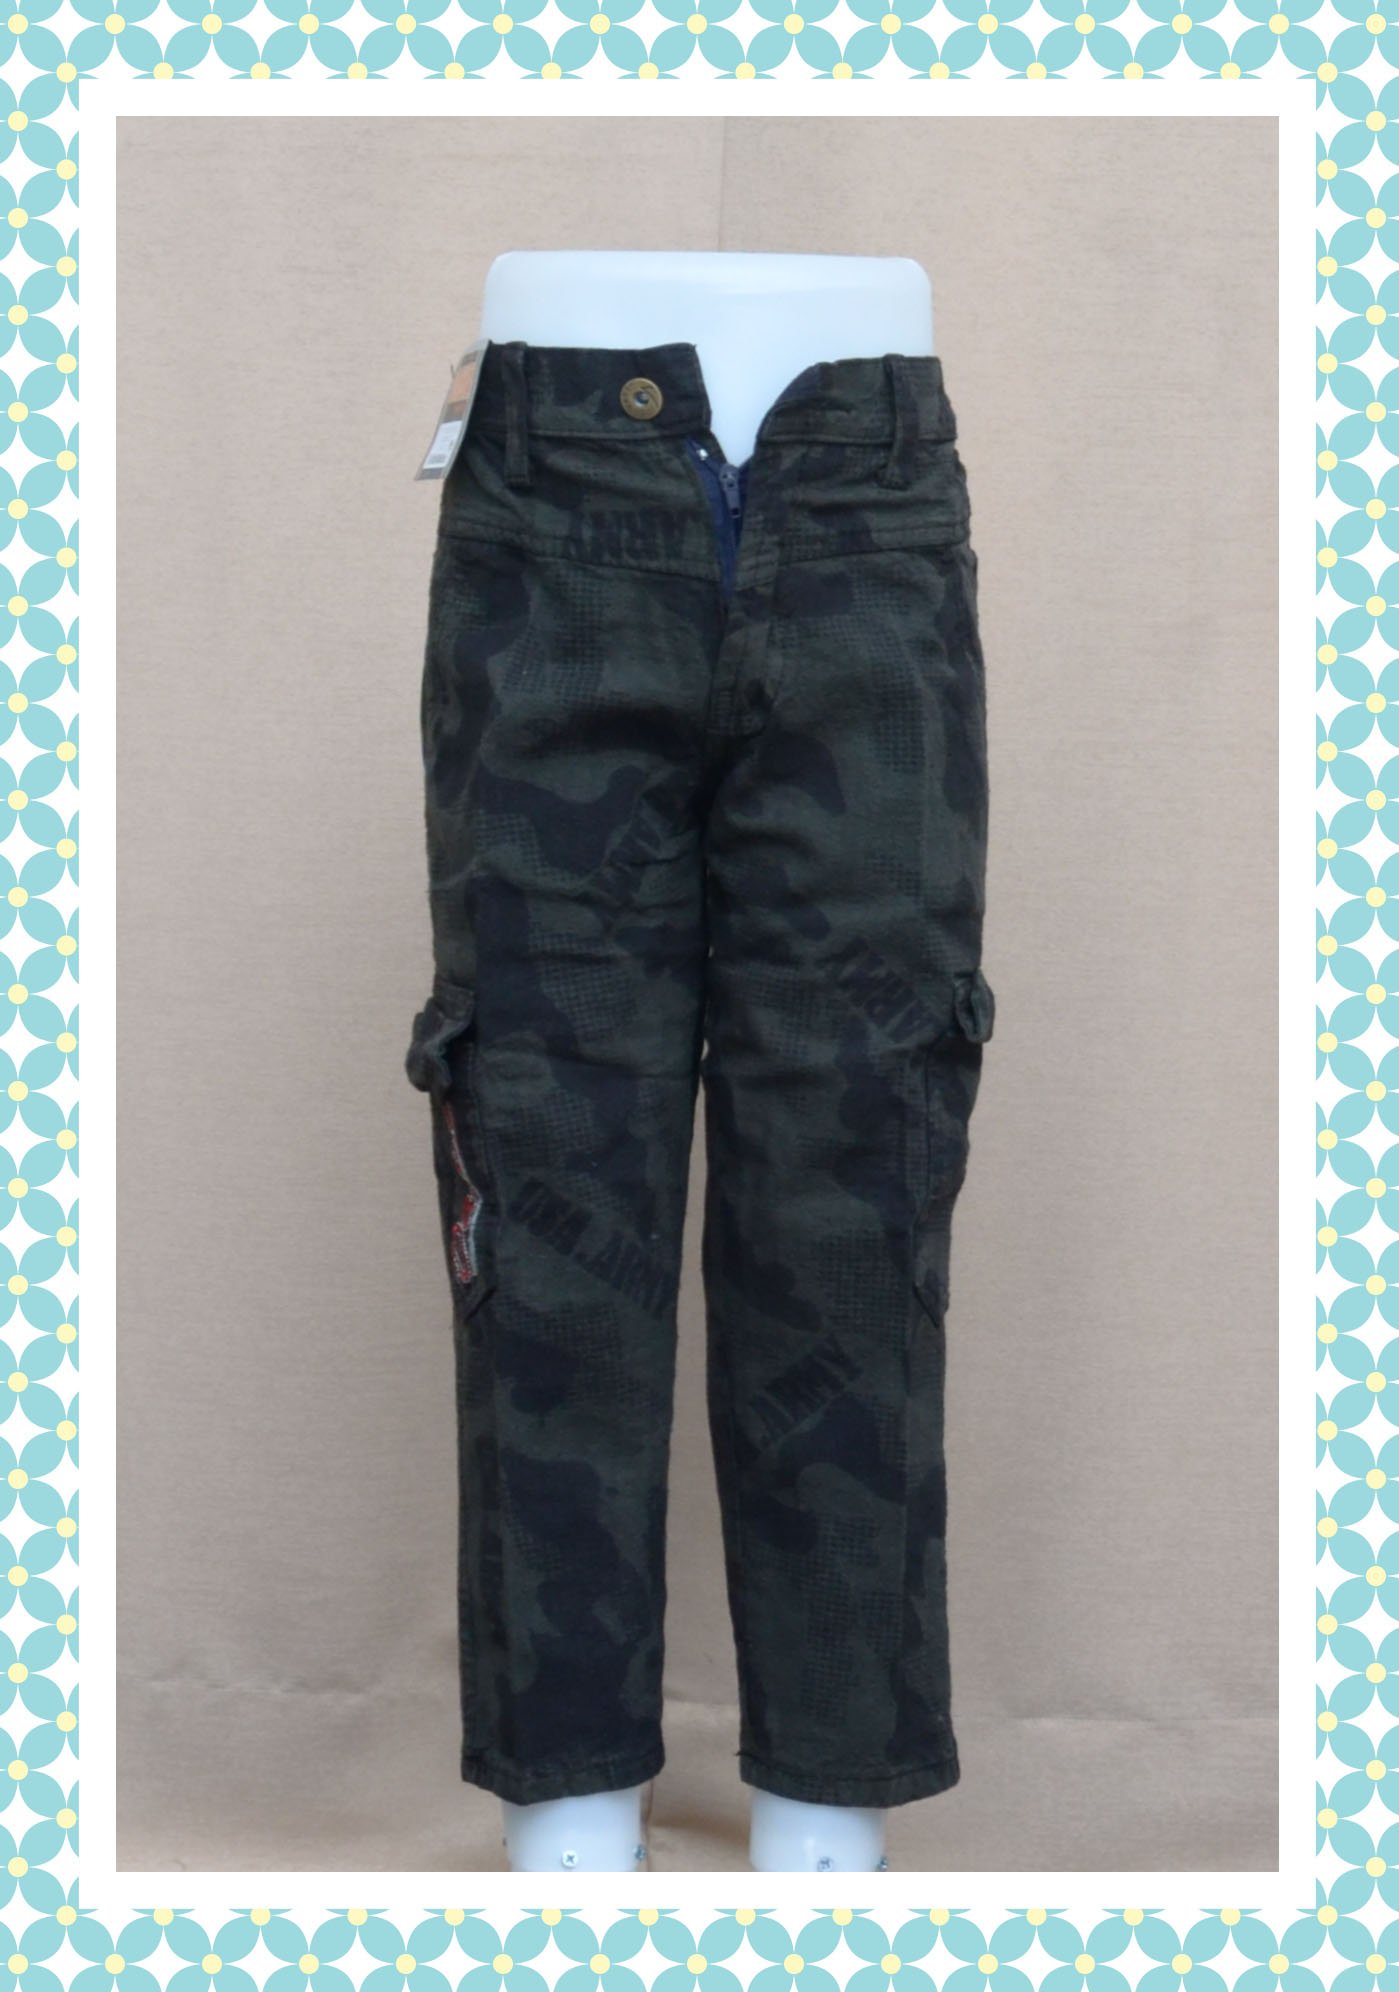 Jeans panjang army anak murah